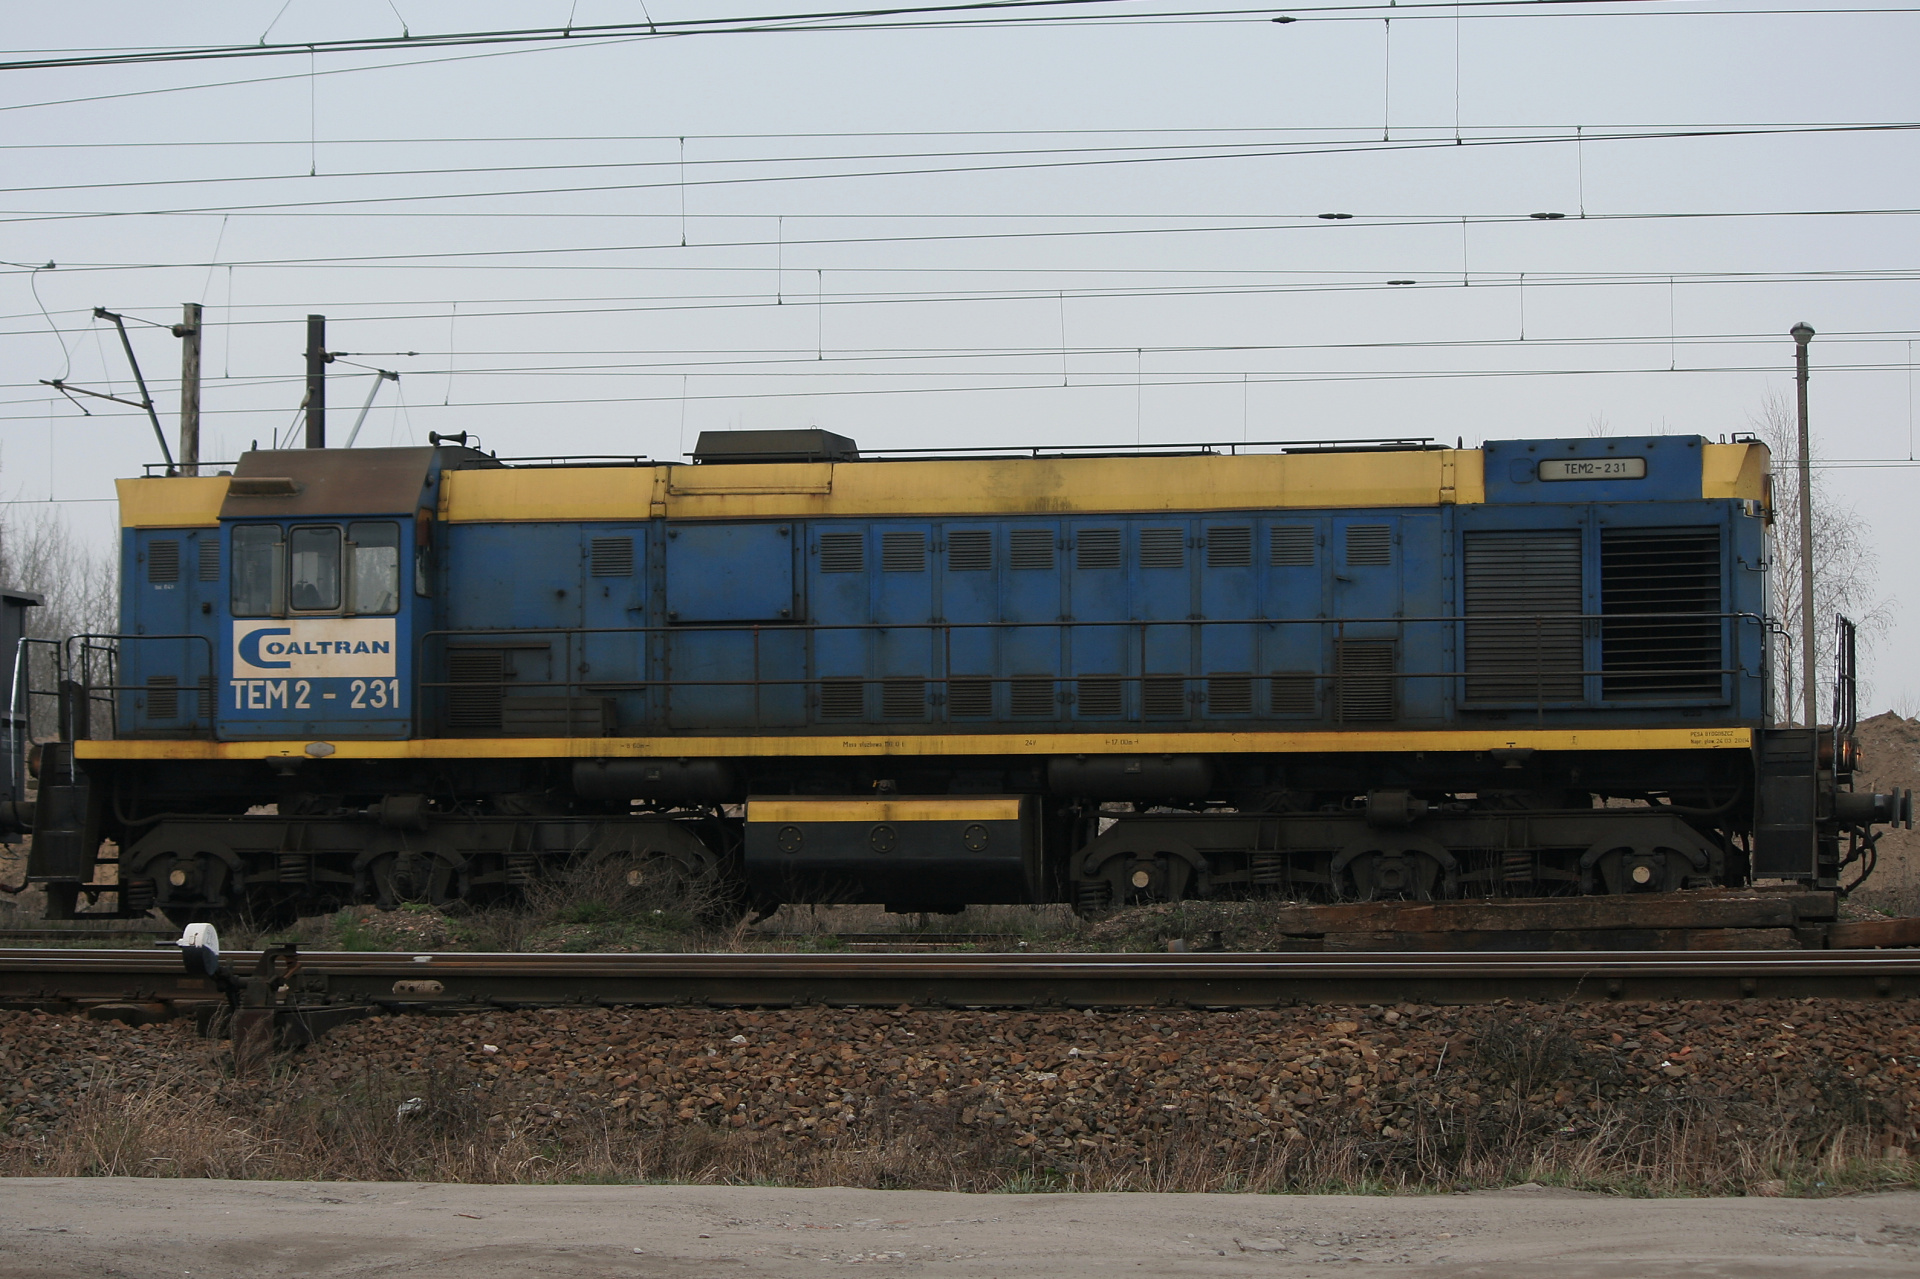 БМЗ/ЛТЗ TEM2-231 (Vehicles » Trains and Locomotives)